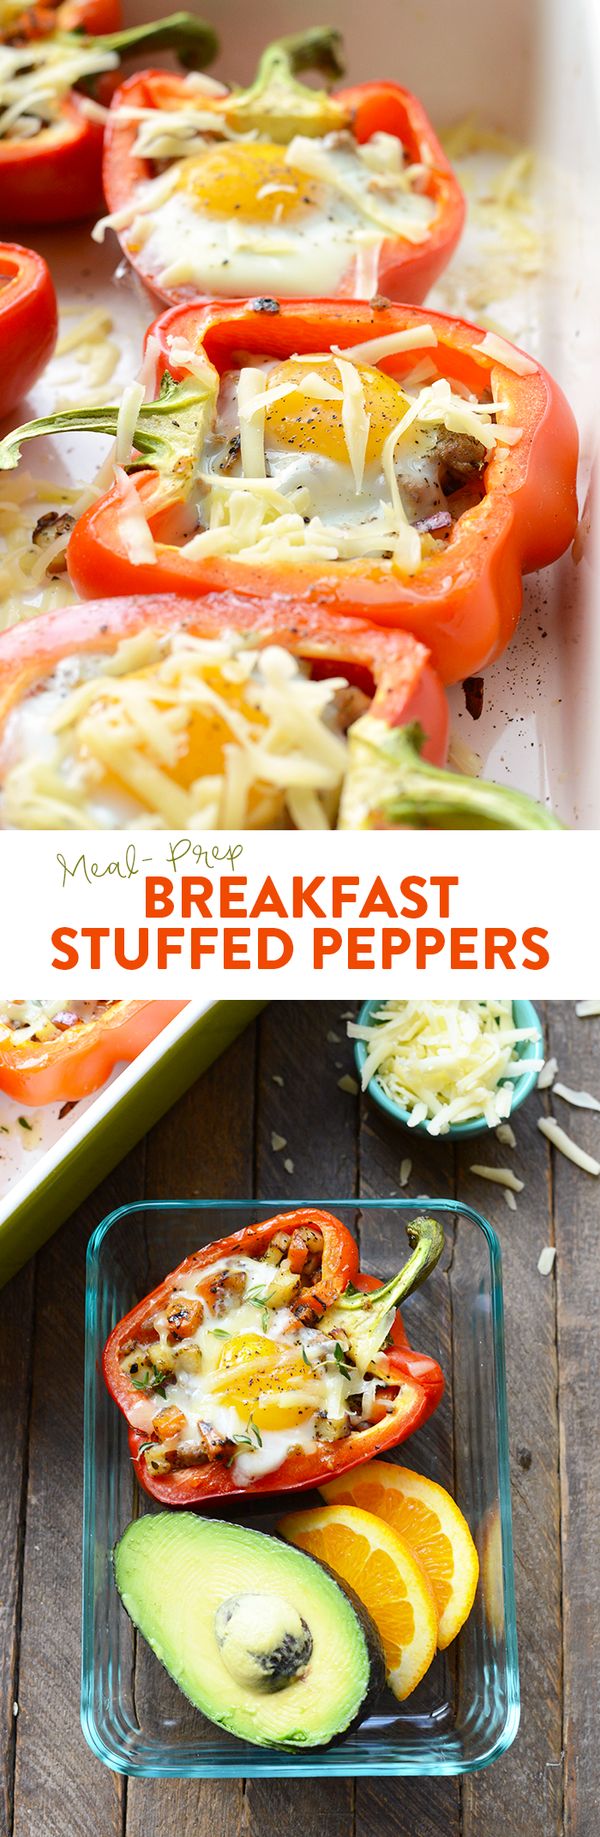 Meal Prep: Breakfast Stuffed Peppers